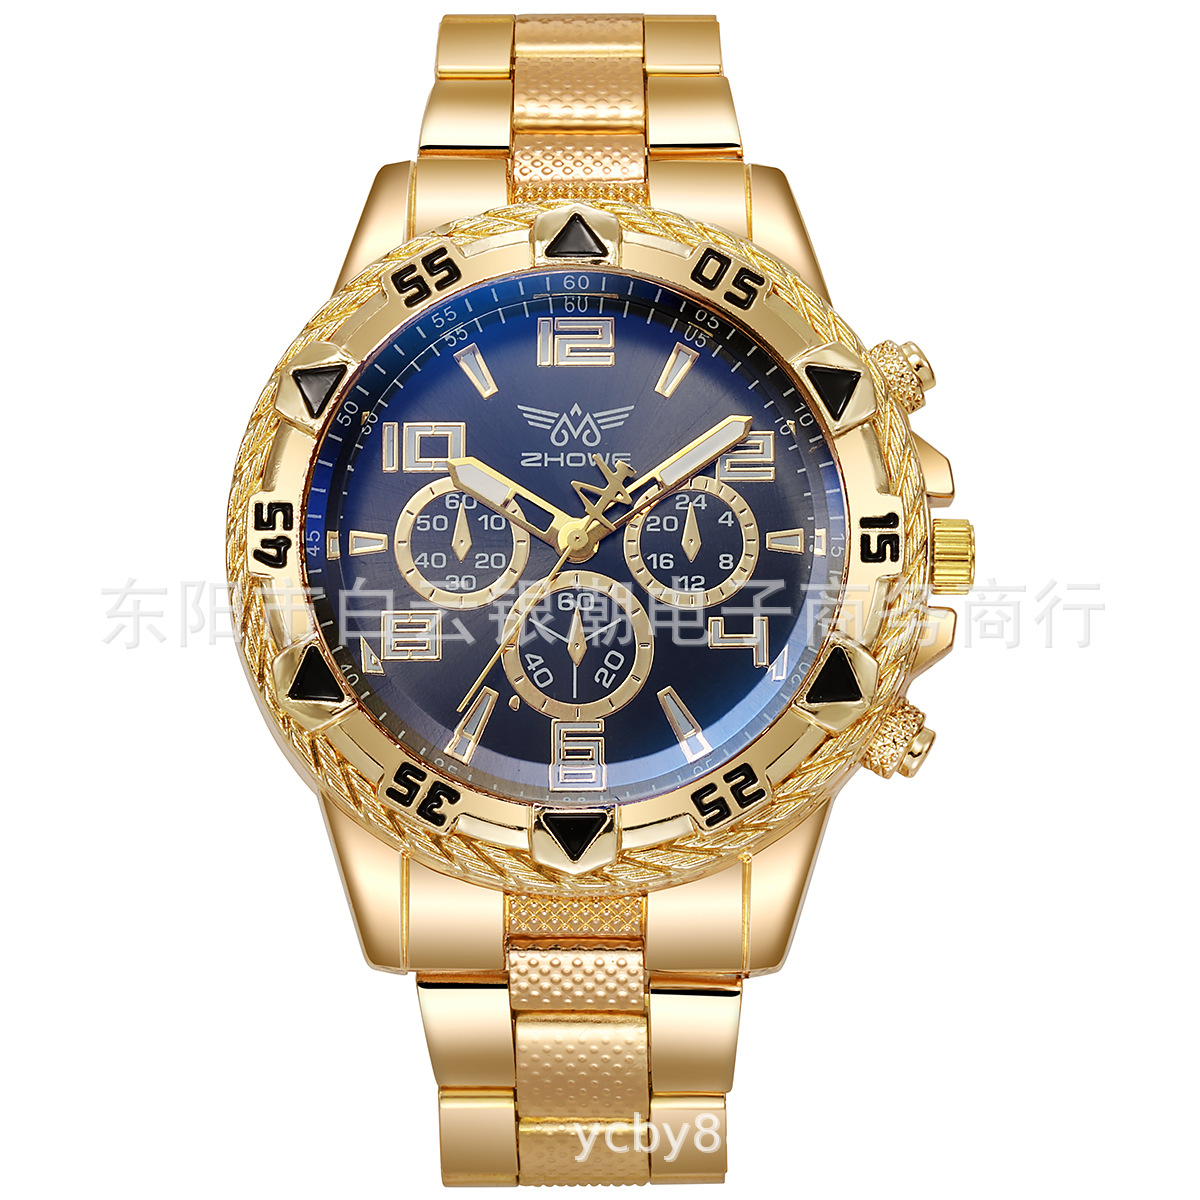 New Products in Stock Yellow Gold Men's Watch Large Dial Men's Watch Middle East Popular Luminous Non-Waterproof Steel Belt Men's Hand